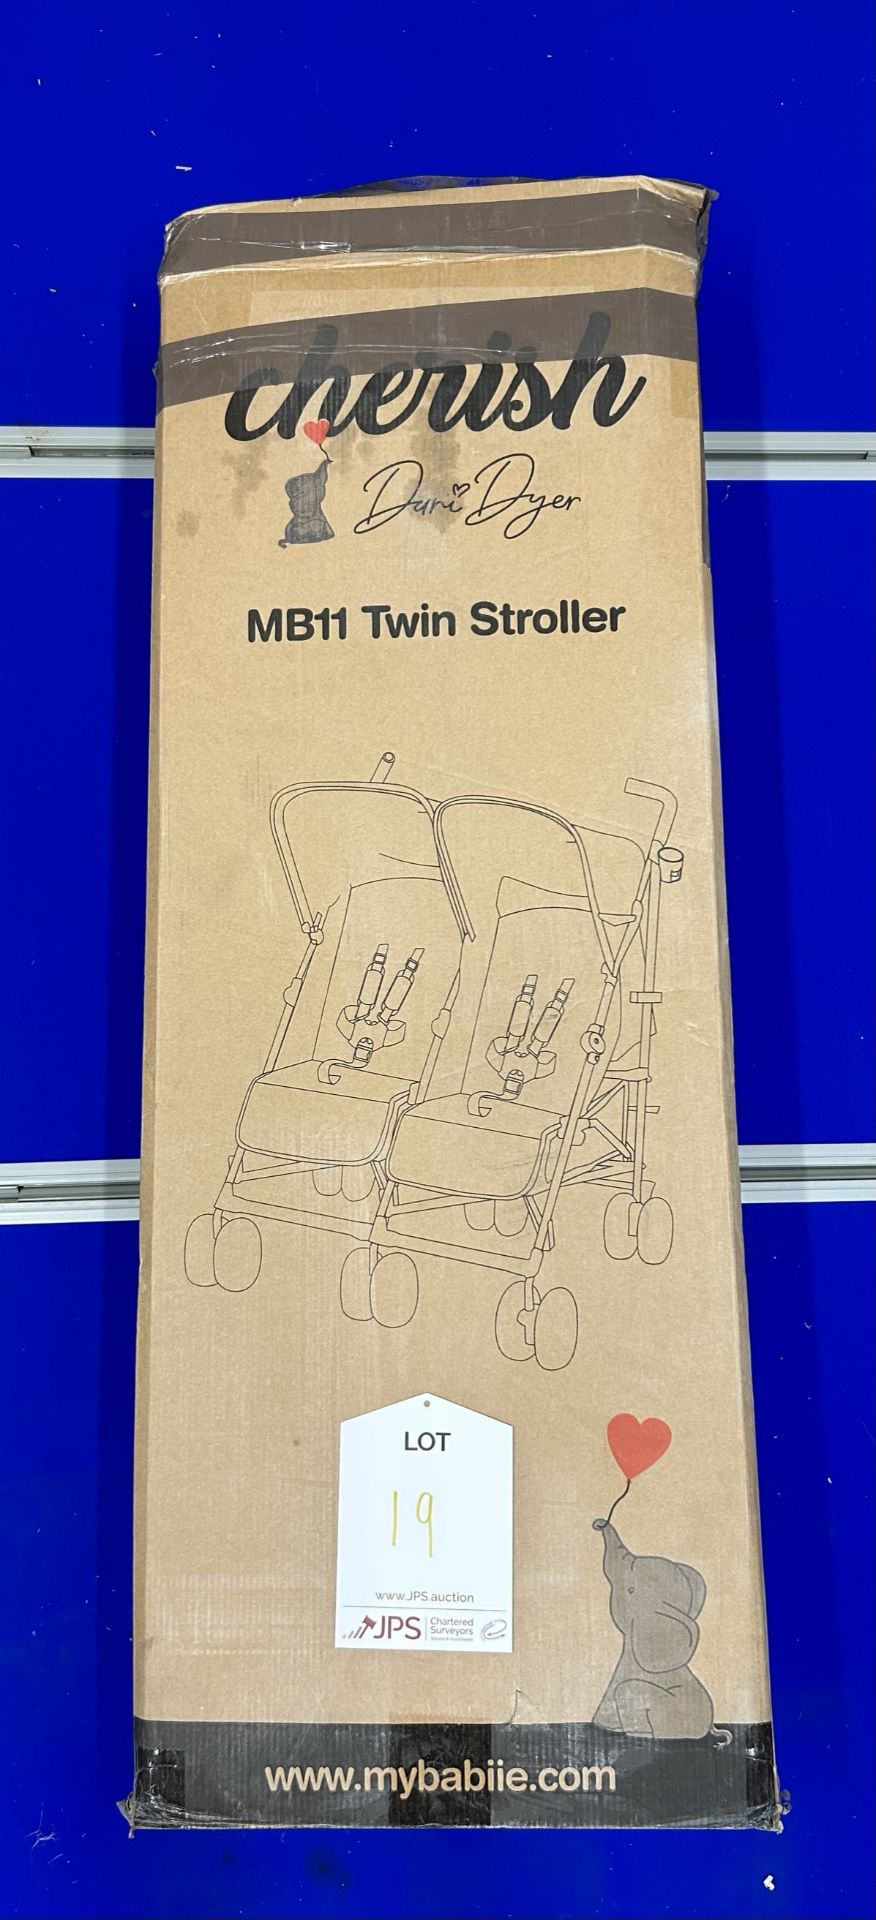 My Babiie MB11 Dani Dyer 'Cherish' Geo Twin Children's Pushchair/Stroller - Image 2 of 5